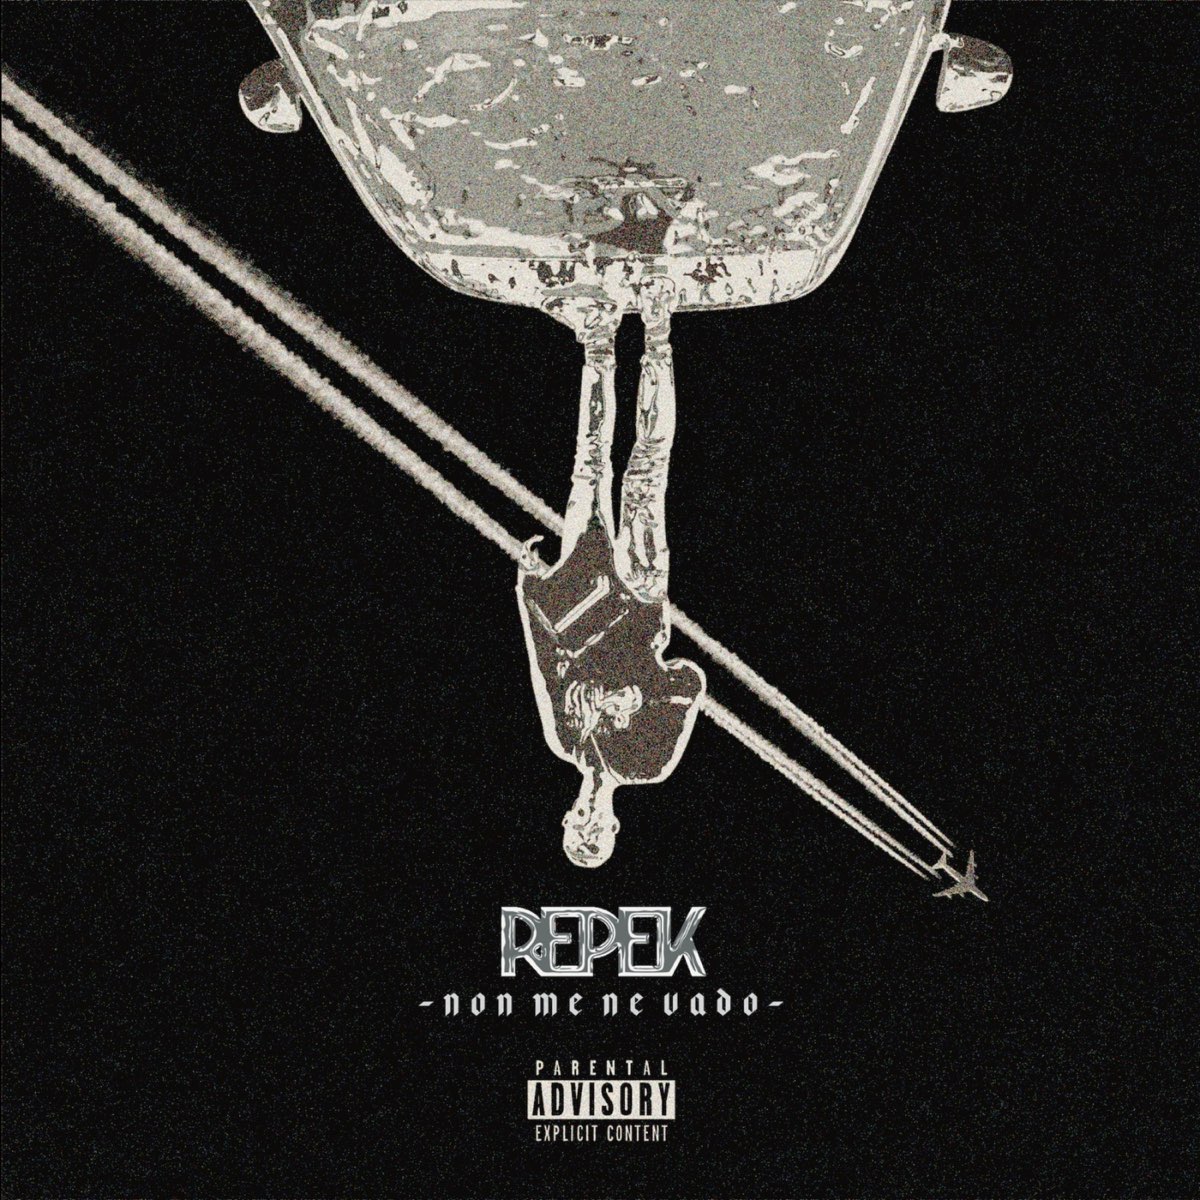 Non me ne vado - Single by Repek on Apple Music